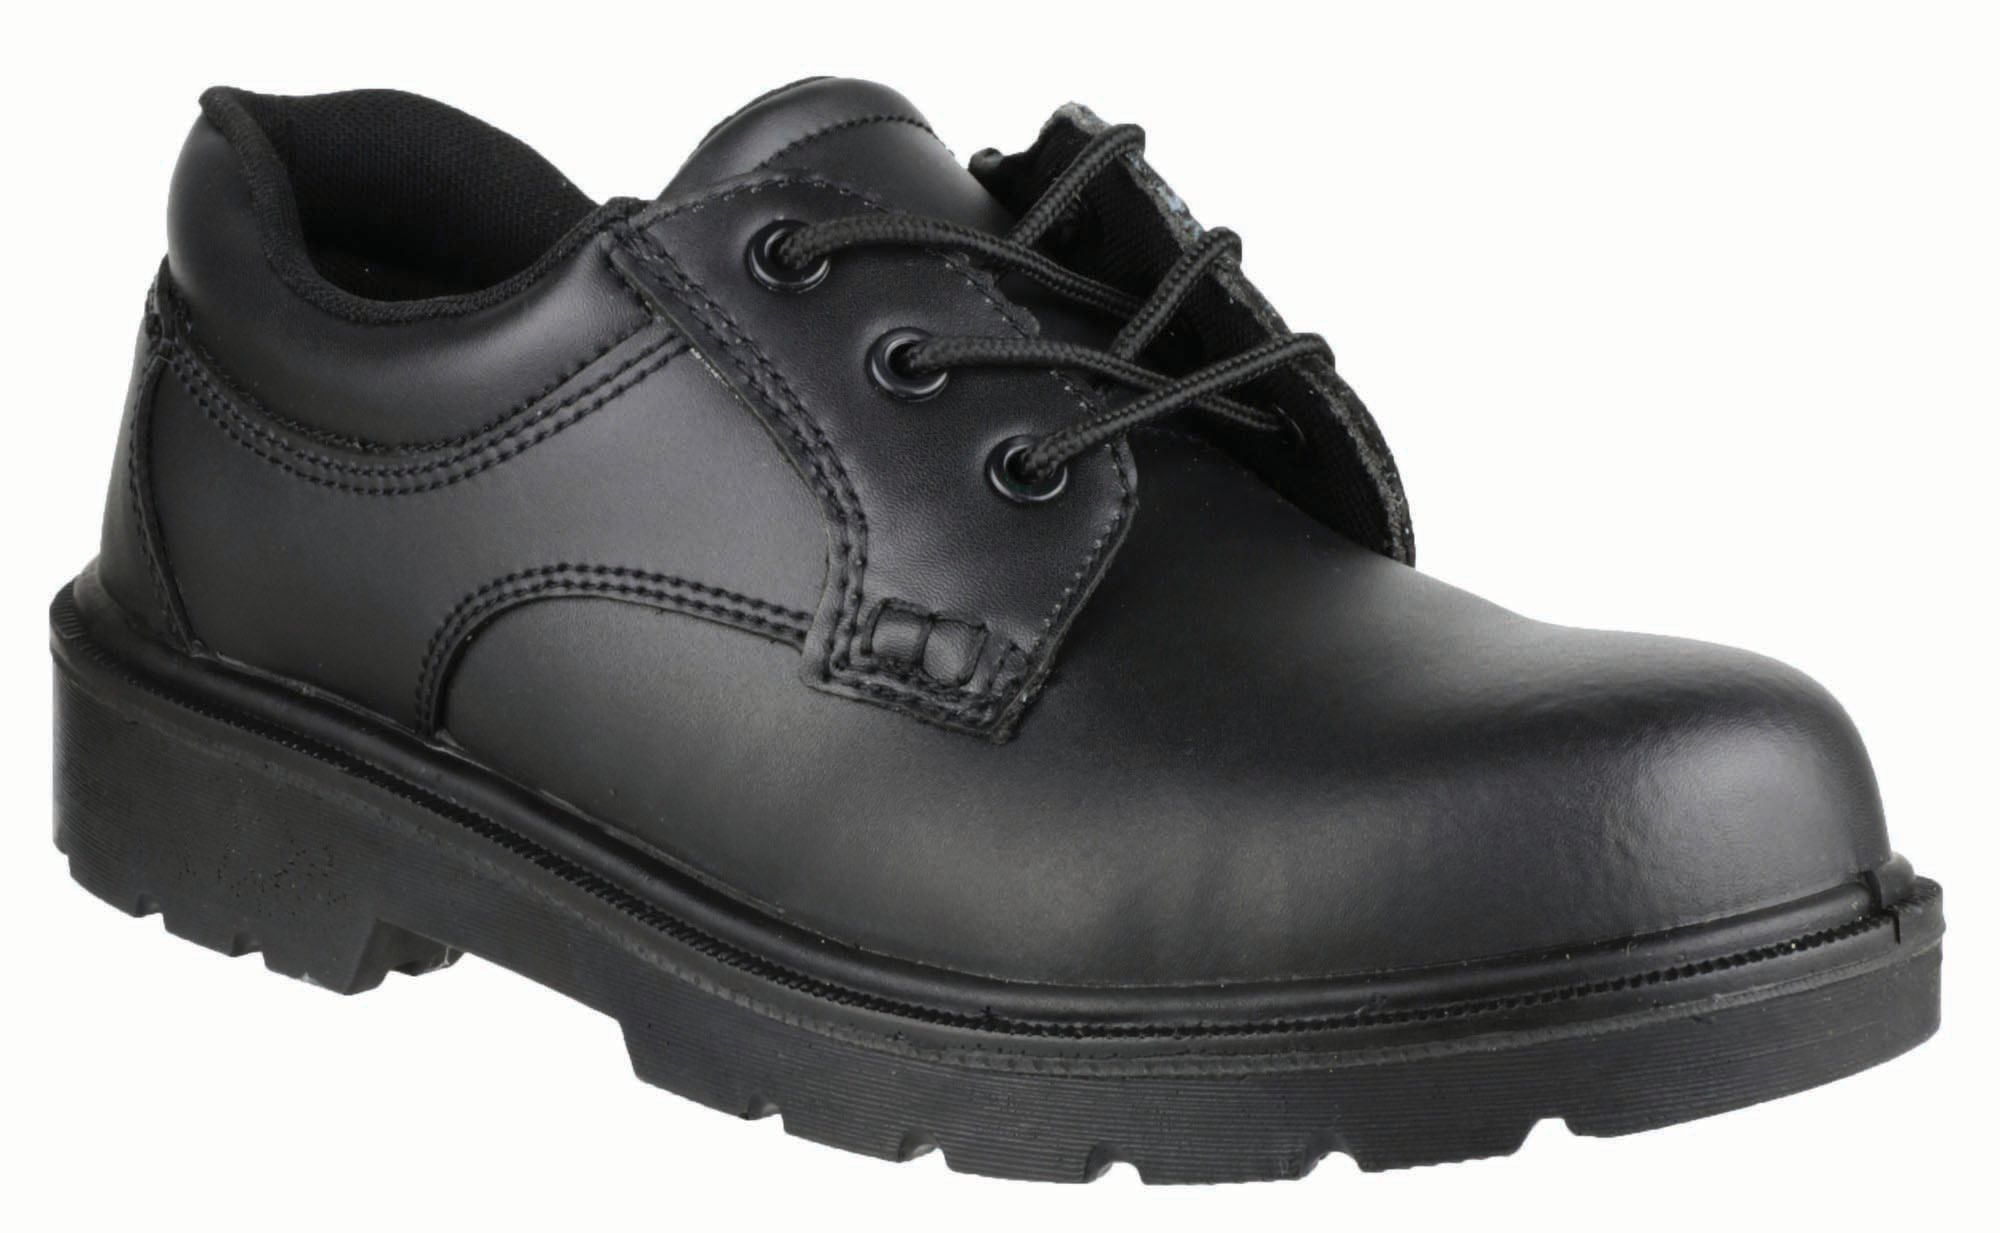 Image of Amblers Safety FS38C Safety Shoe - Black Size 9